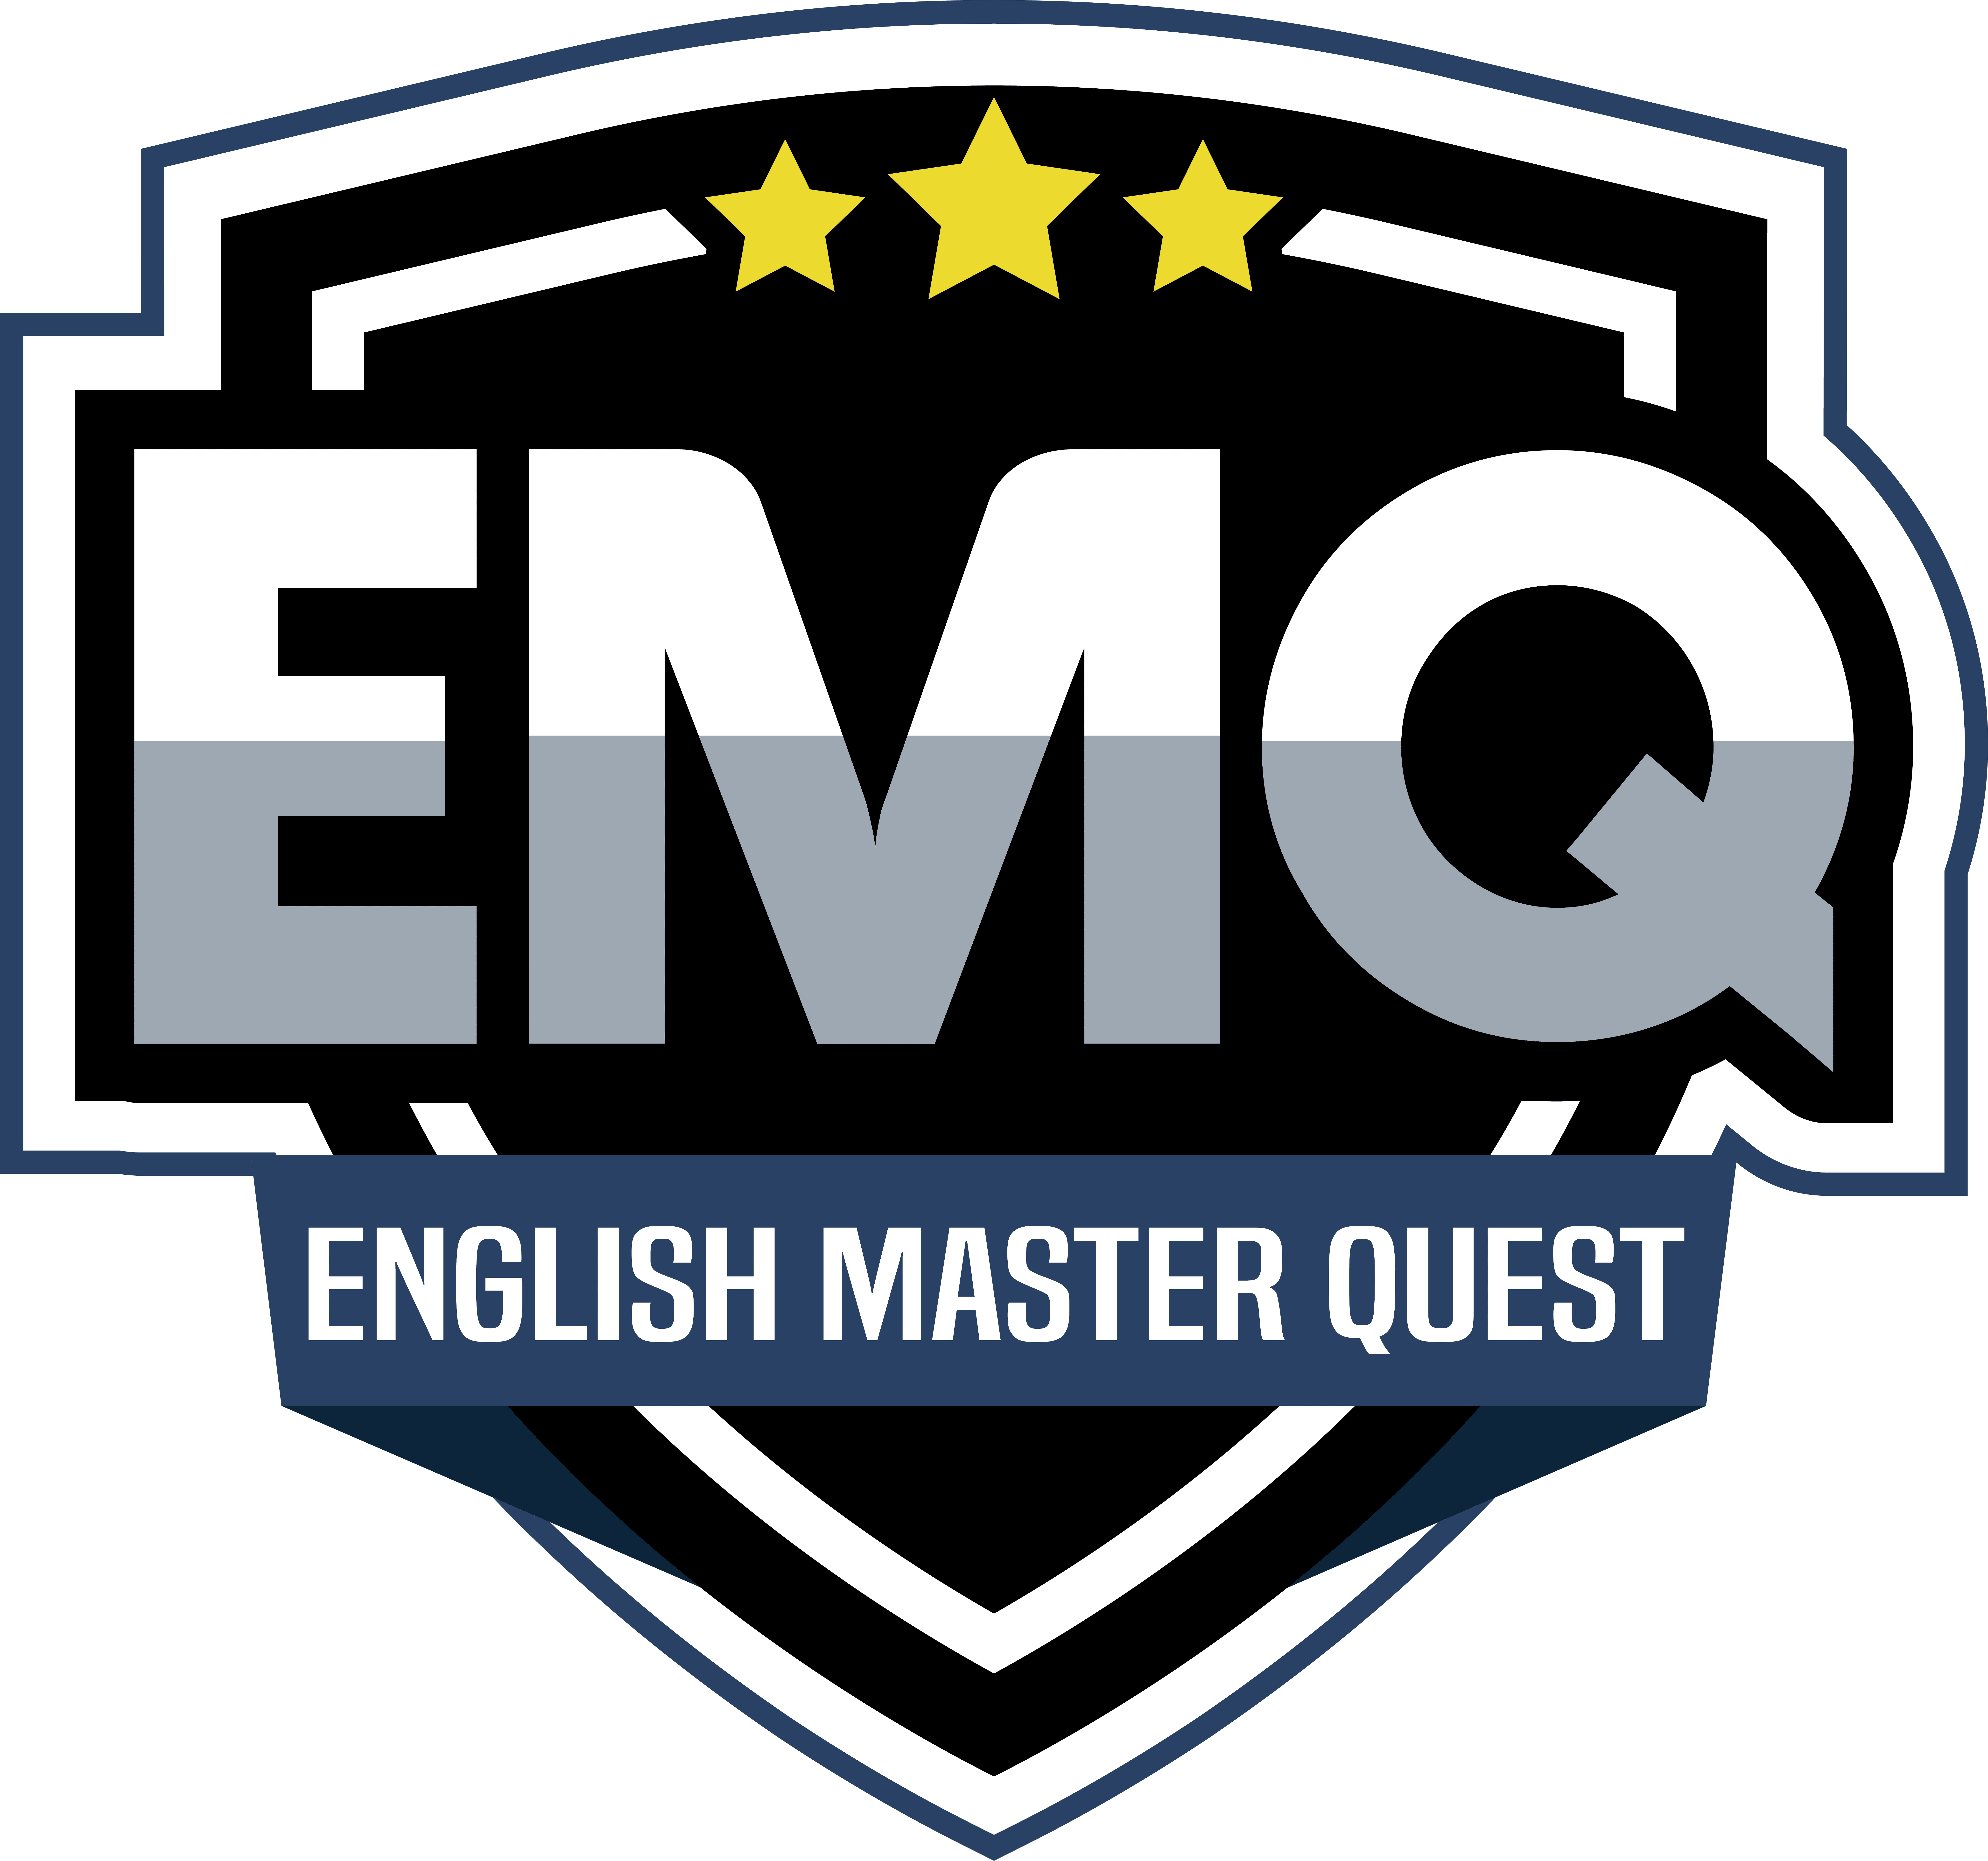 English Master Quest